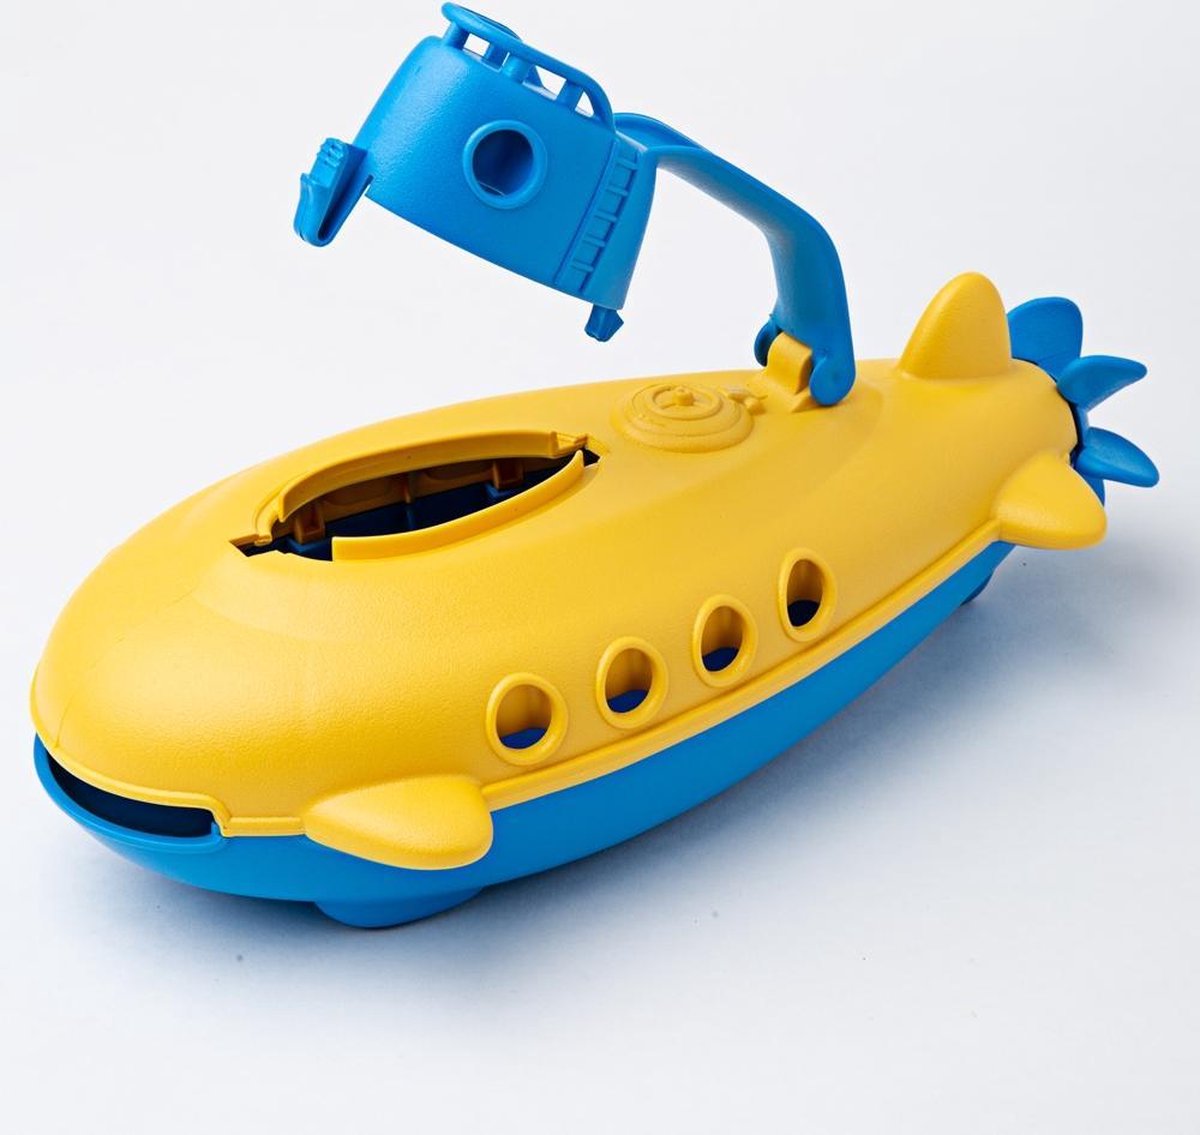 Green Toys - Onderzeeboot | bol.com